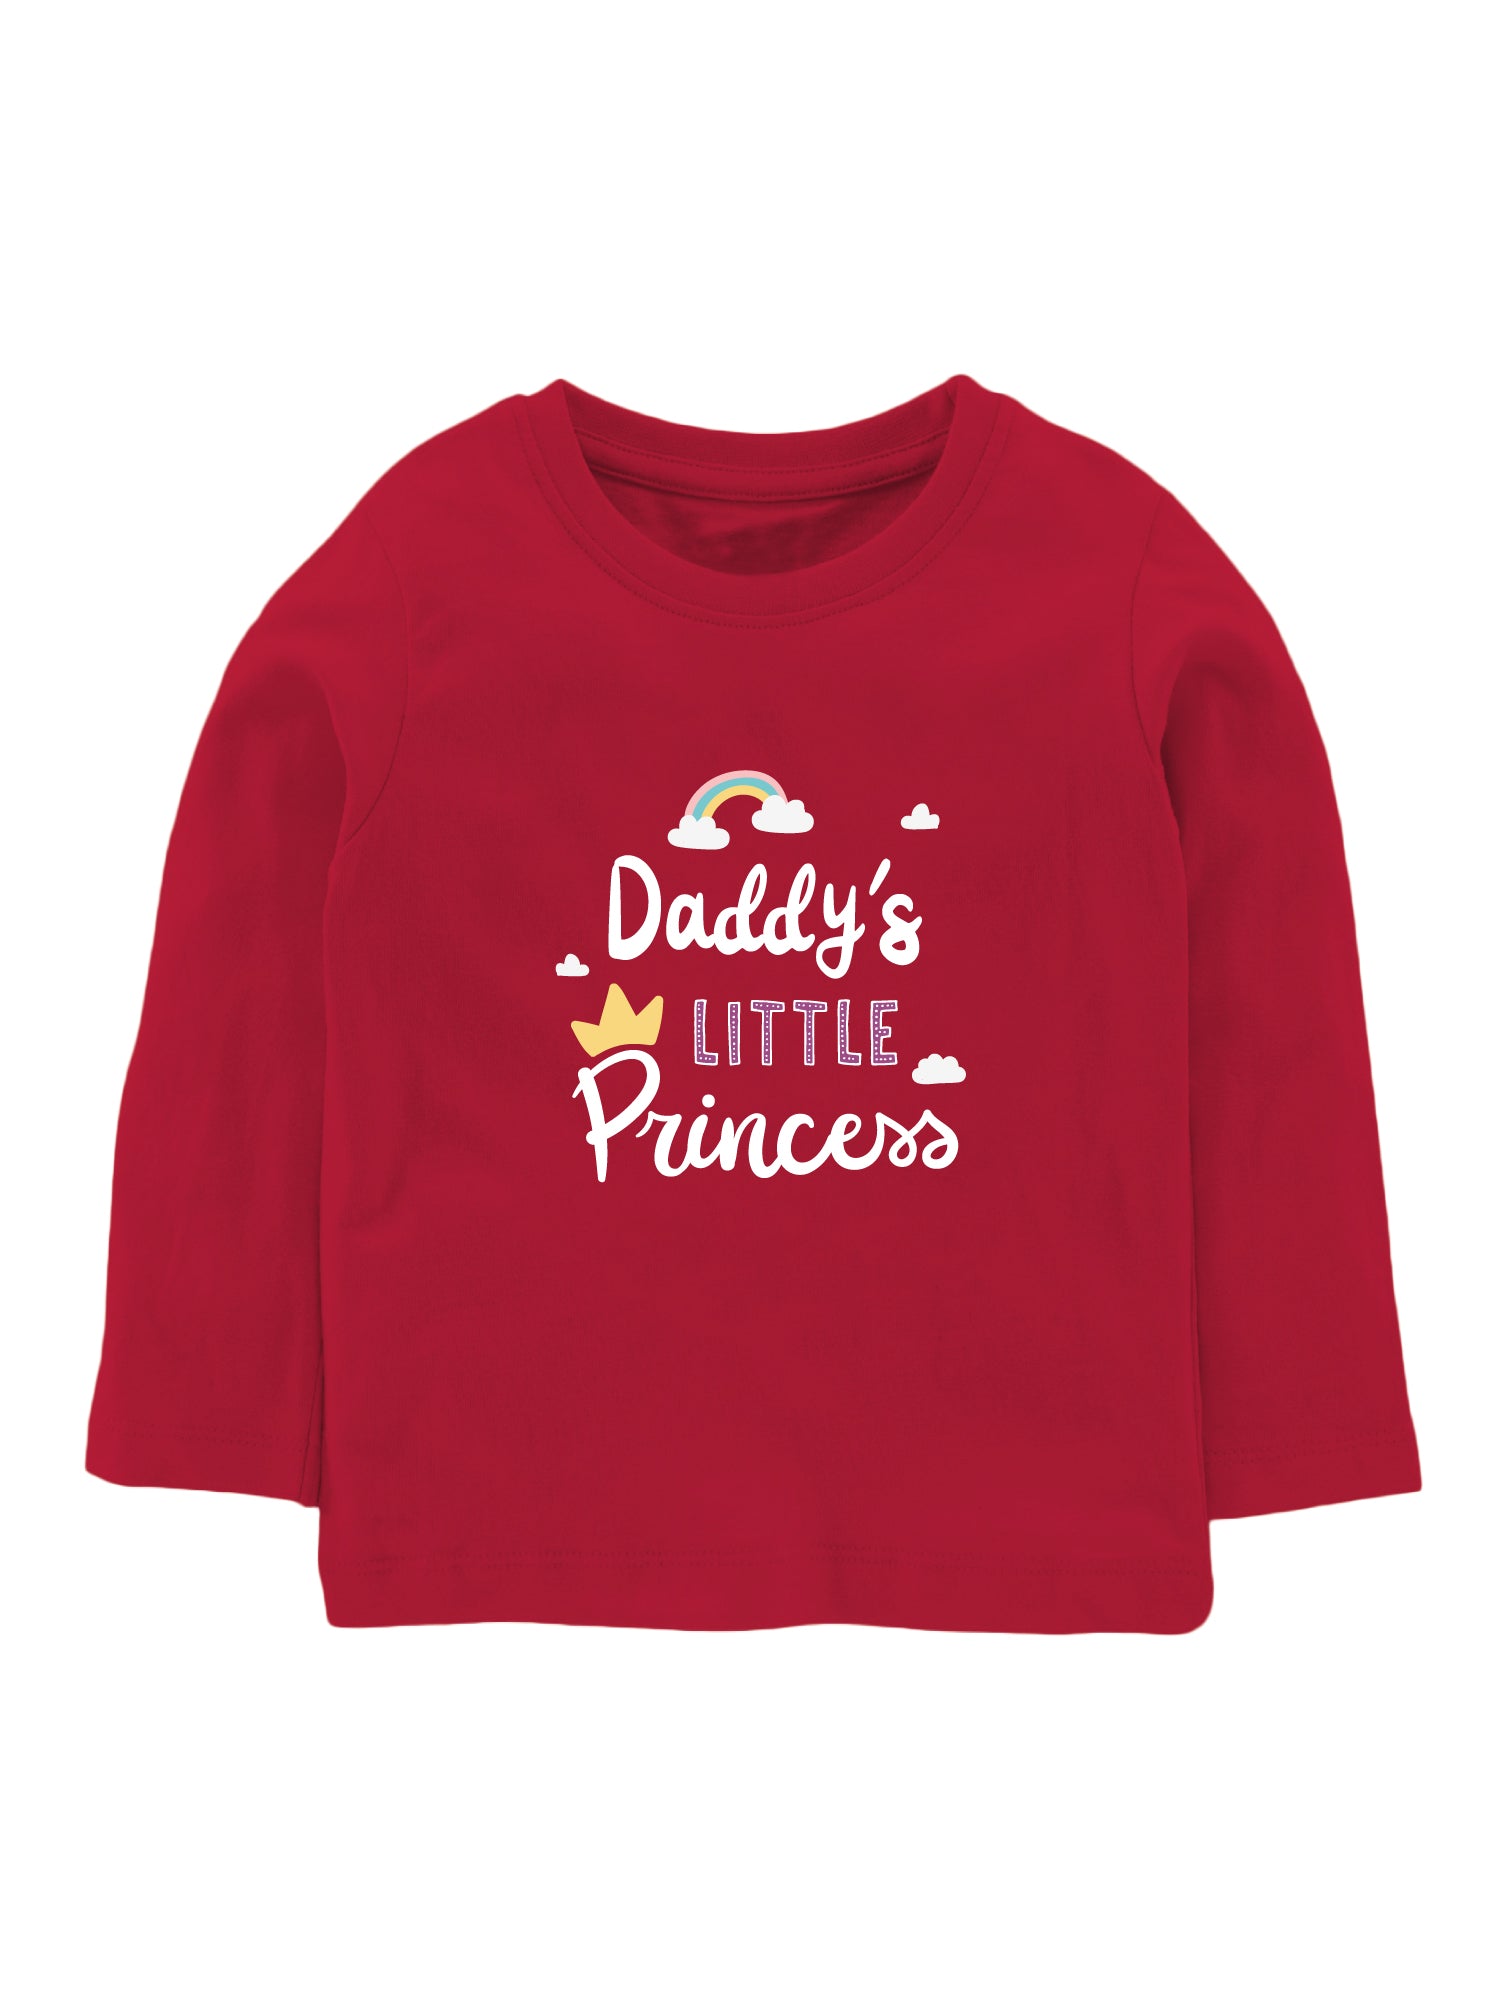 Daddy's Princess - Tee